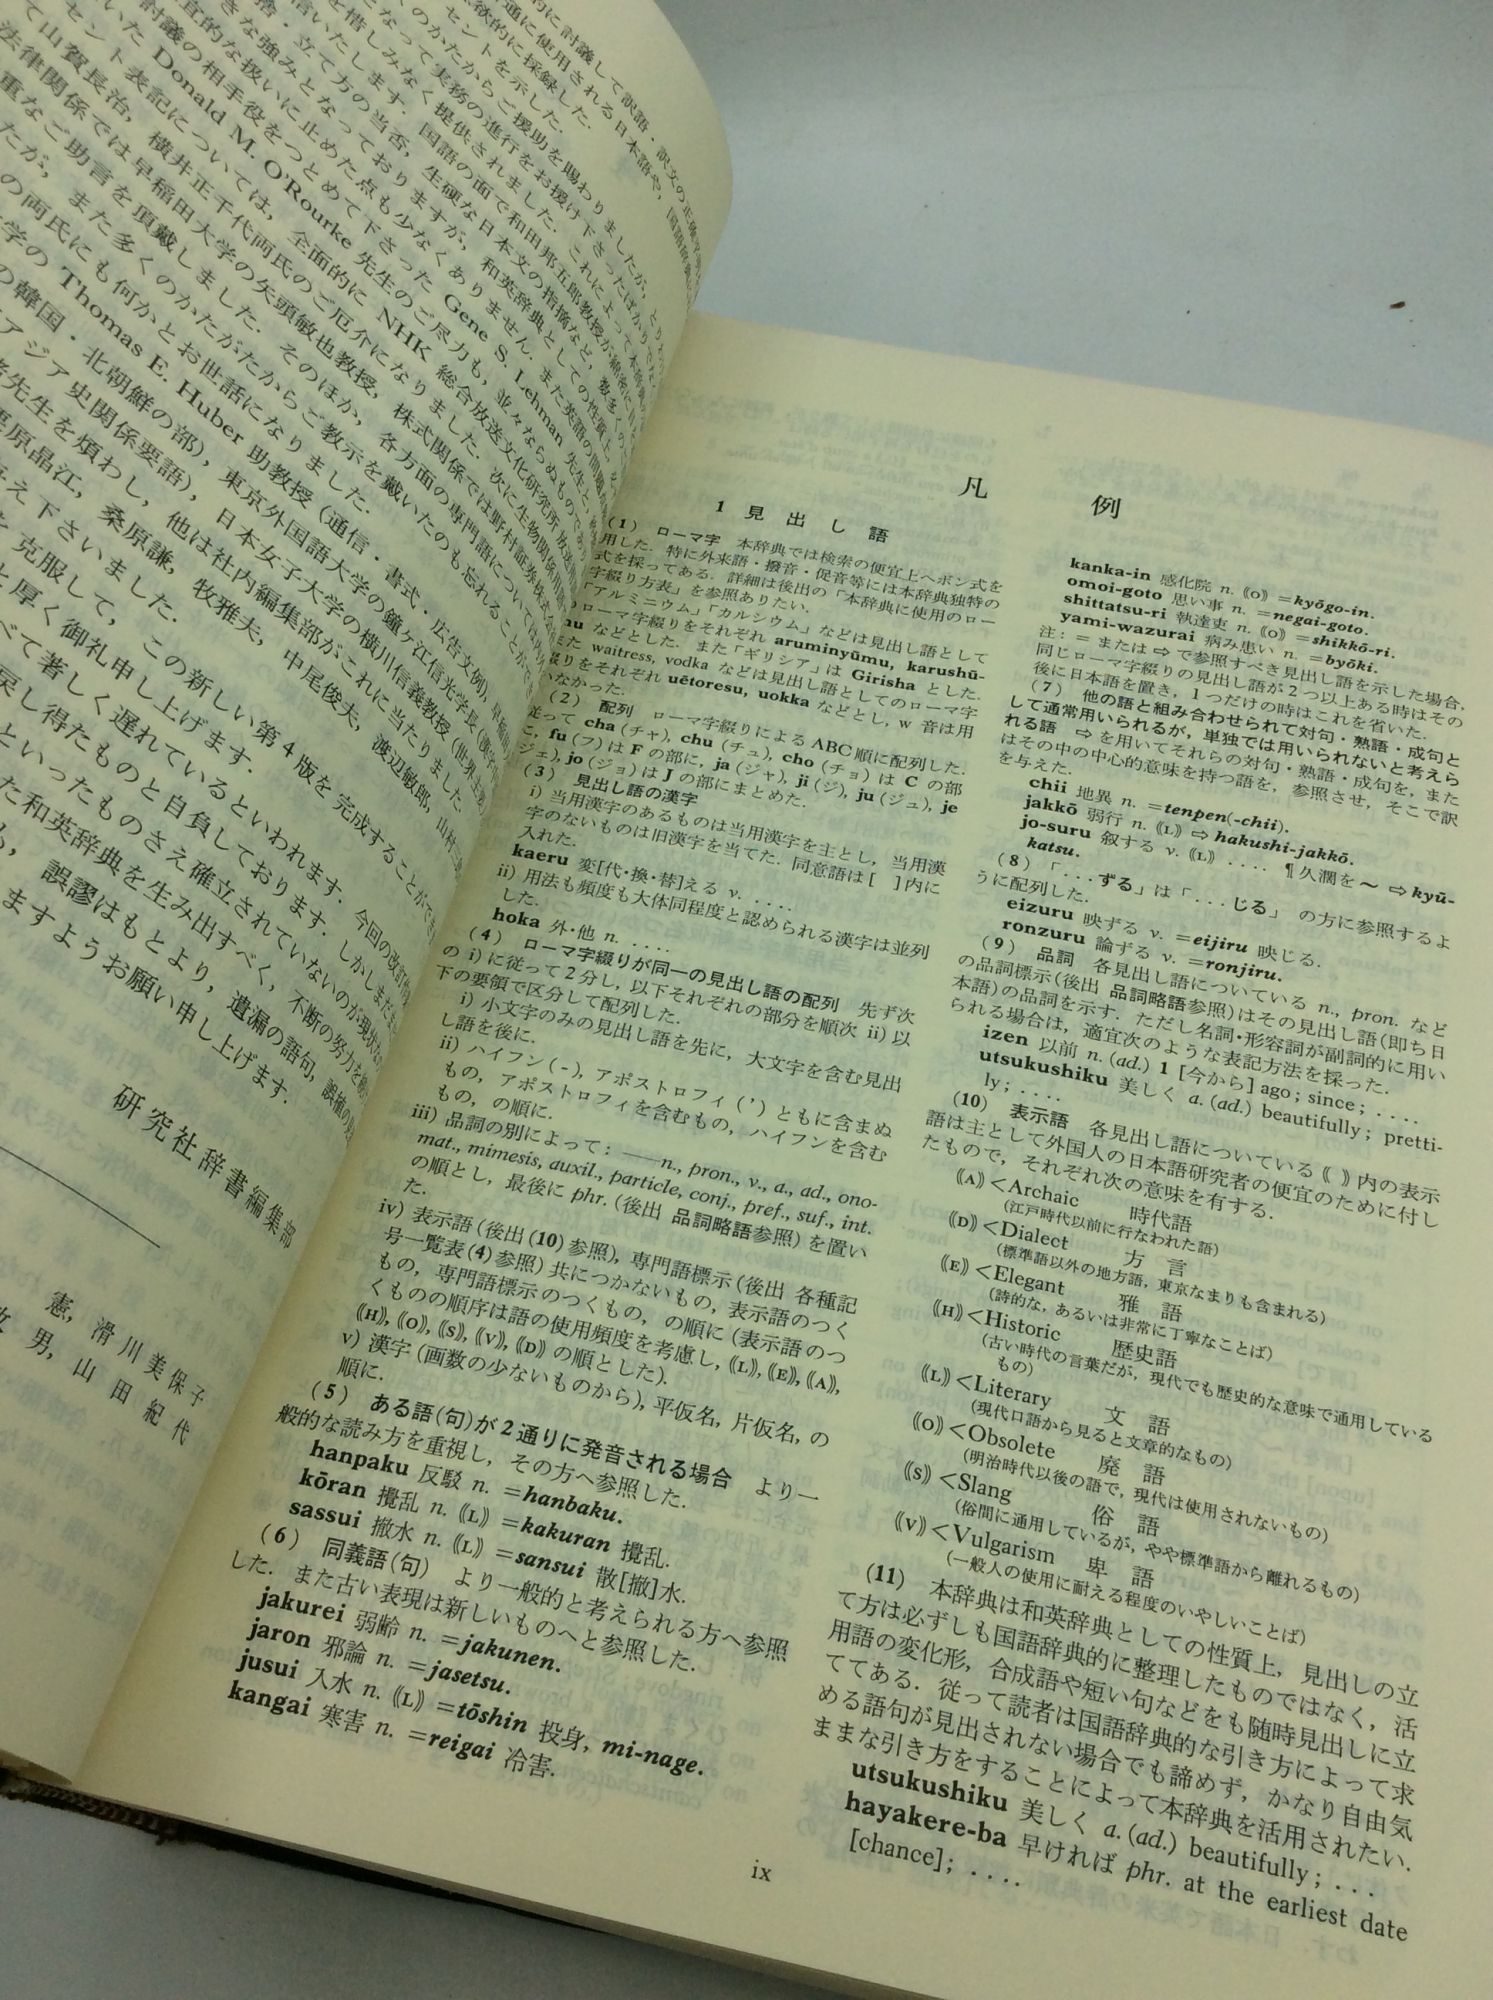 KENKYUSHA'S NEW JAPANESE-ENGLISH DICTIONARY by ed Koh Masuda on Kubik Fine  Books Ltd